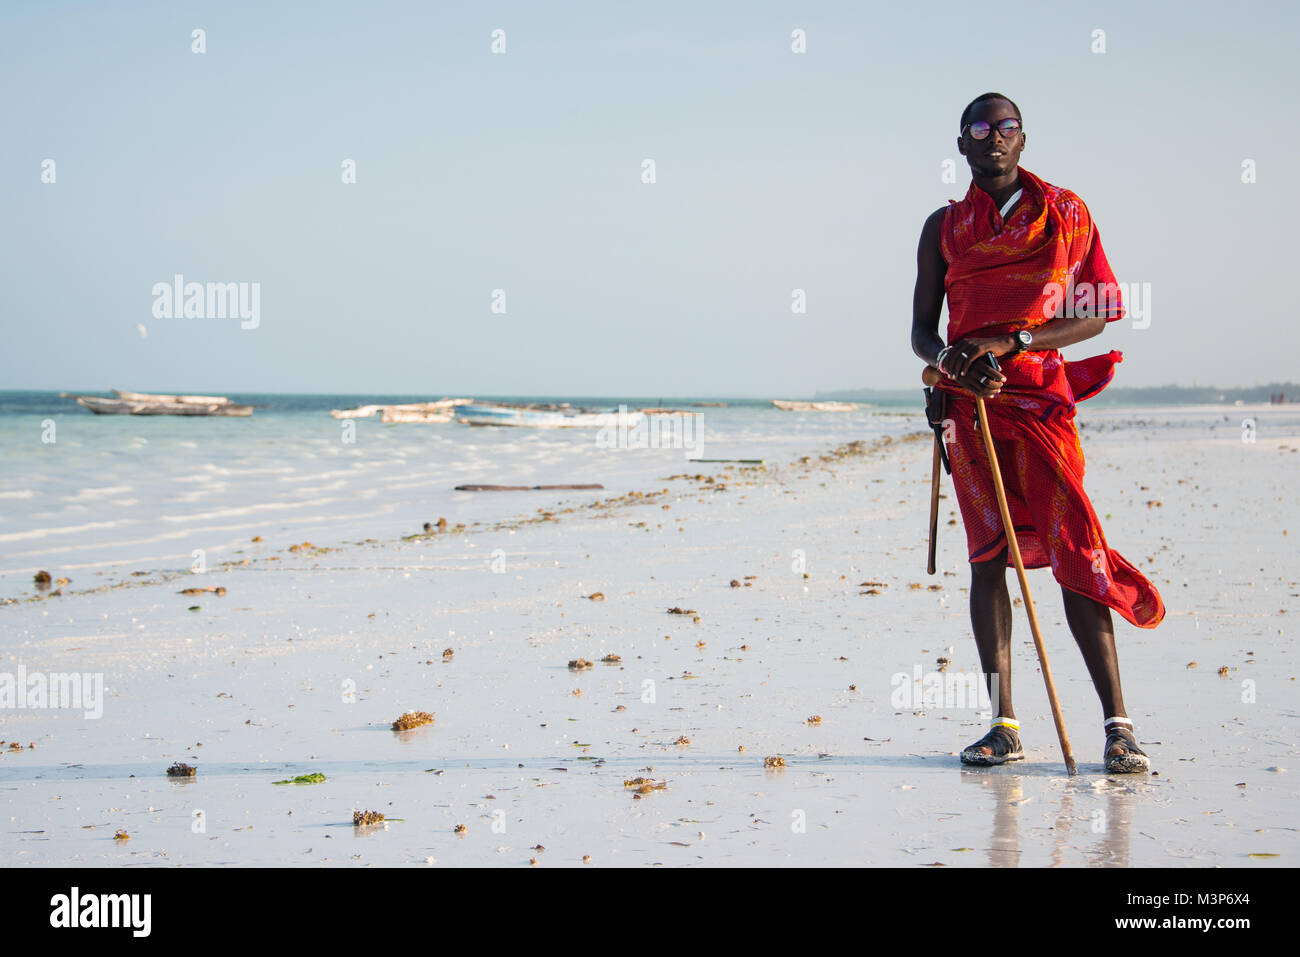 KIWENGWA, Zanzíbar - DEC 27, 2017: Retrato del hombre Masai en ropas tradicionales posando en la playa, Kiwengwa, Zanzíbar Foto de stock